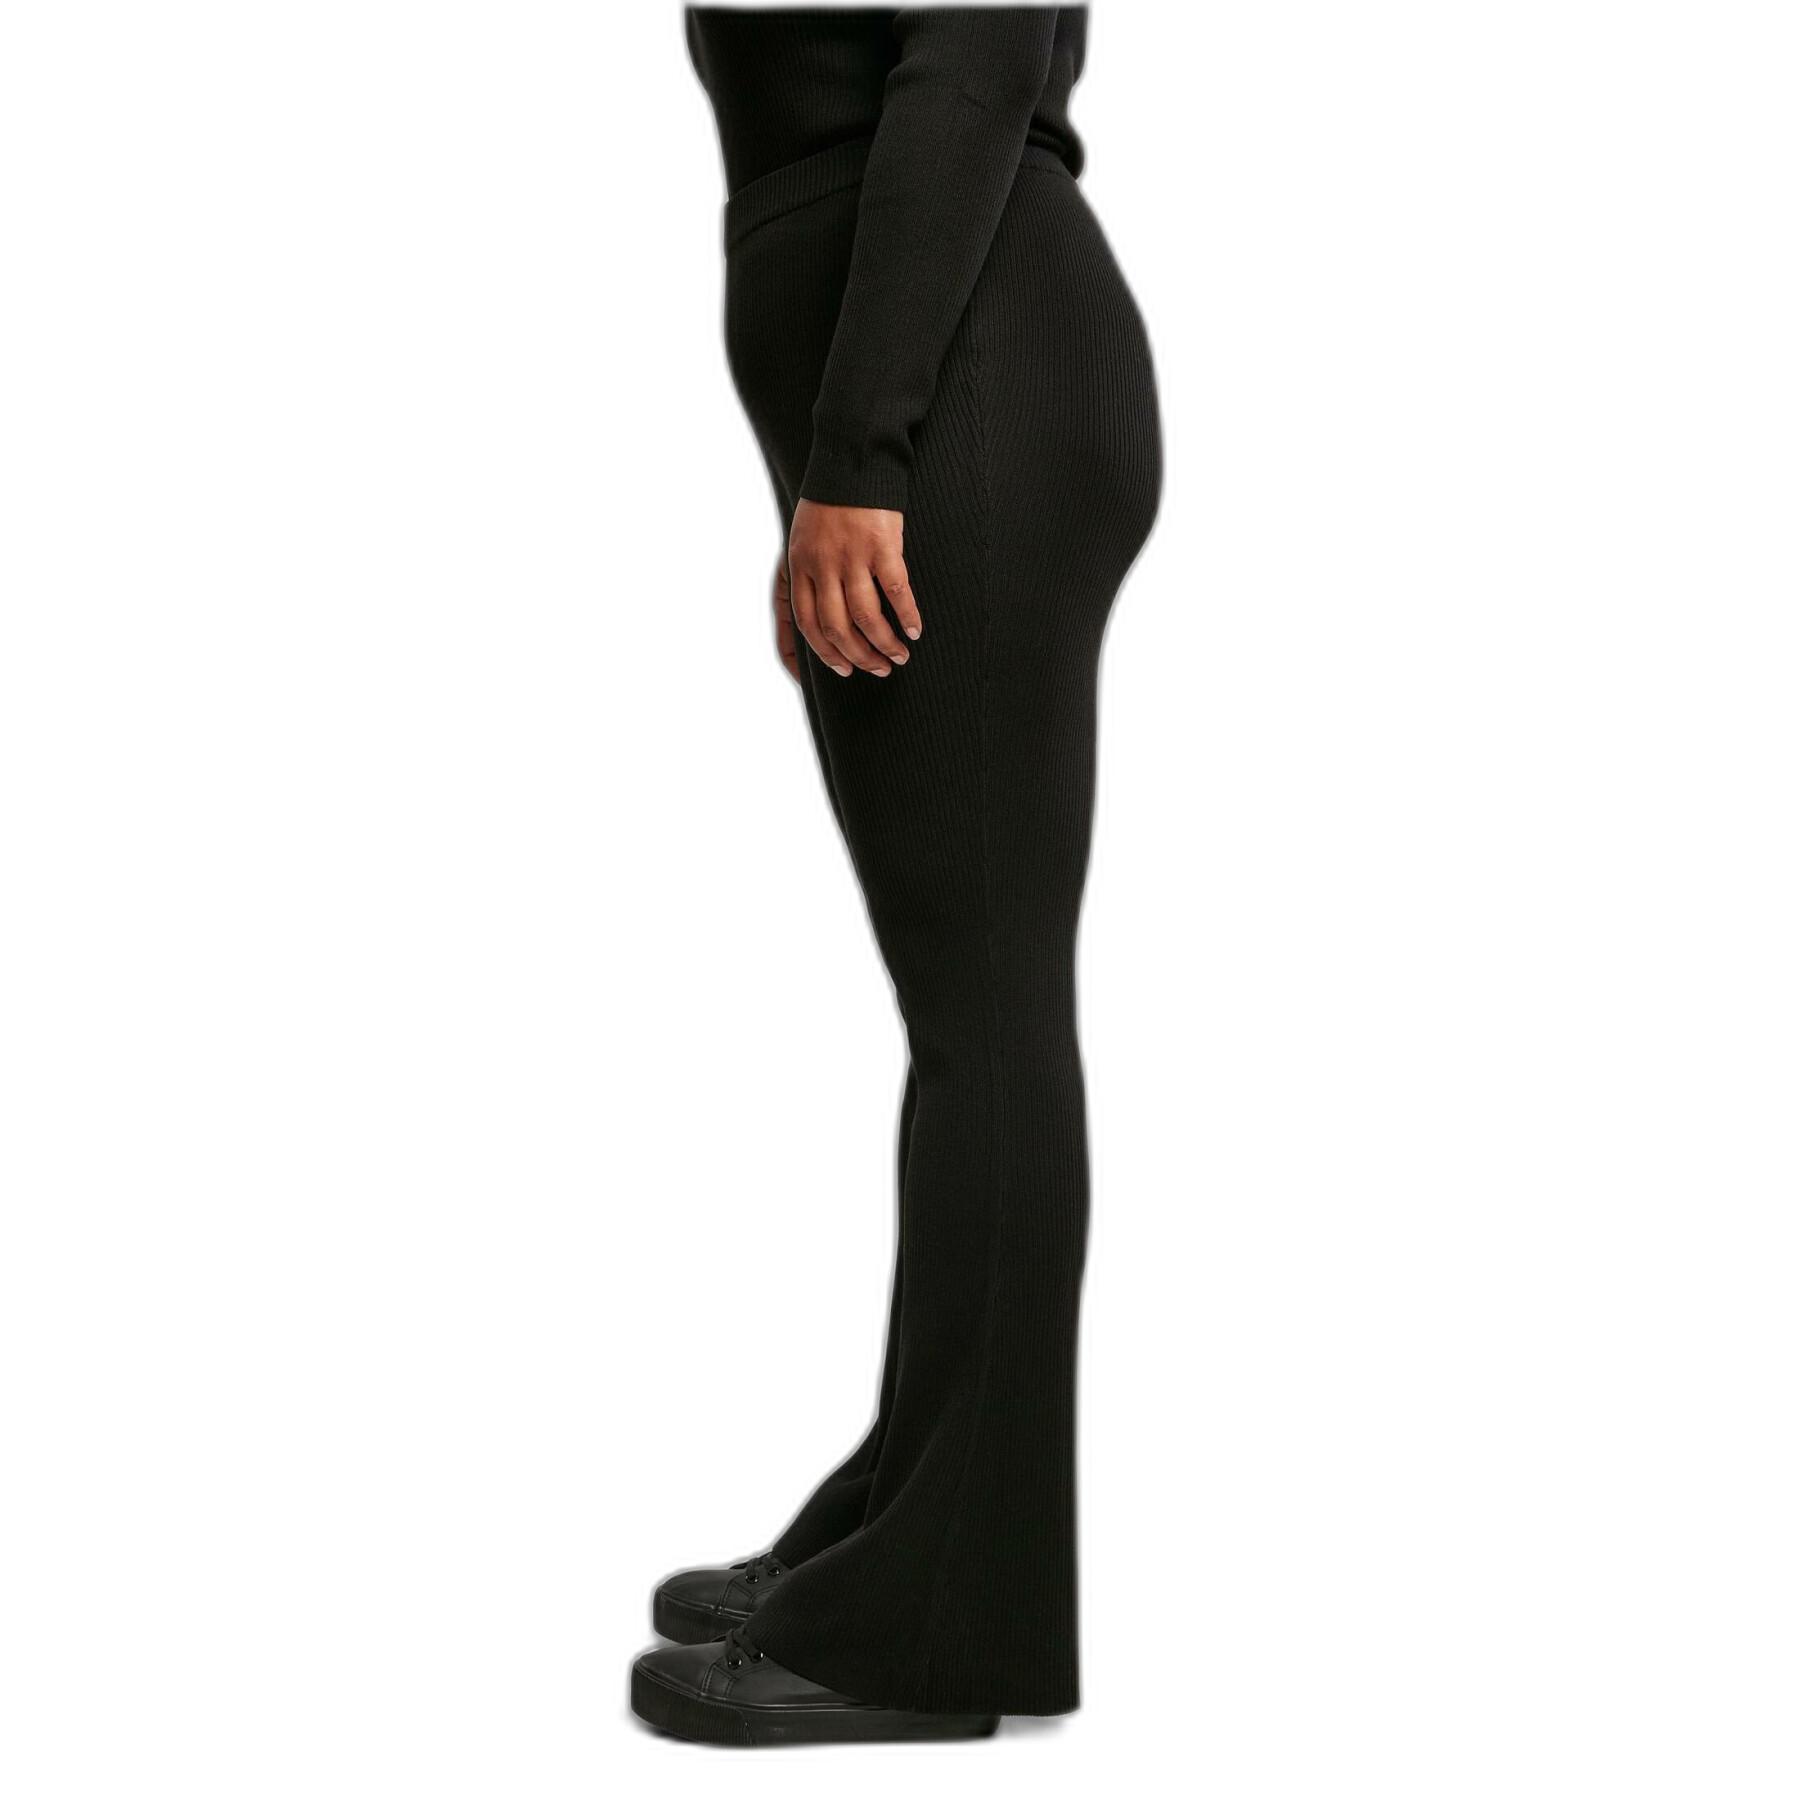 Legging woman Urban Classics Rib Knit Bootcut GT - Tights & Leggings -  Women\'s Clothing